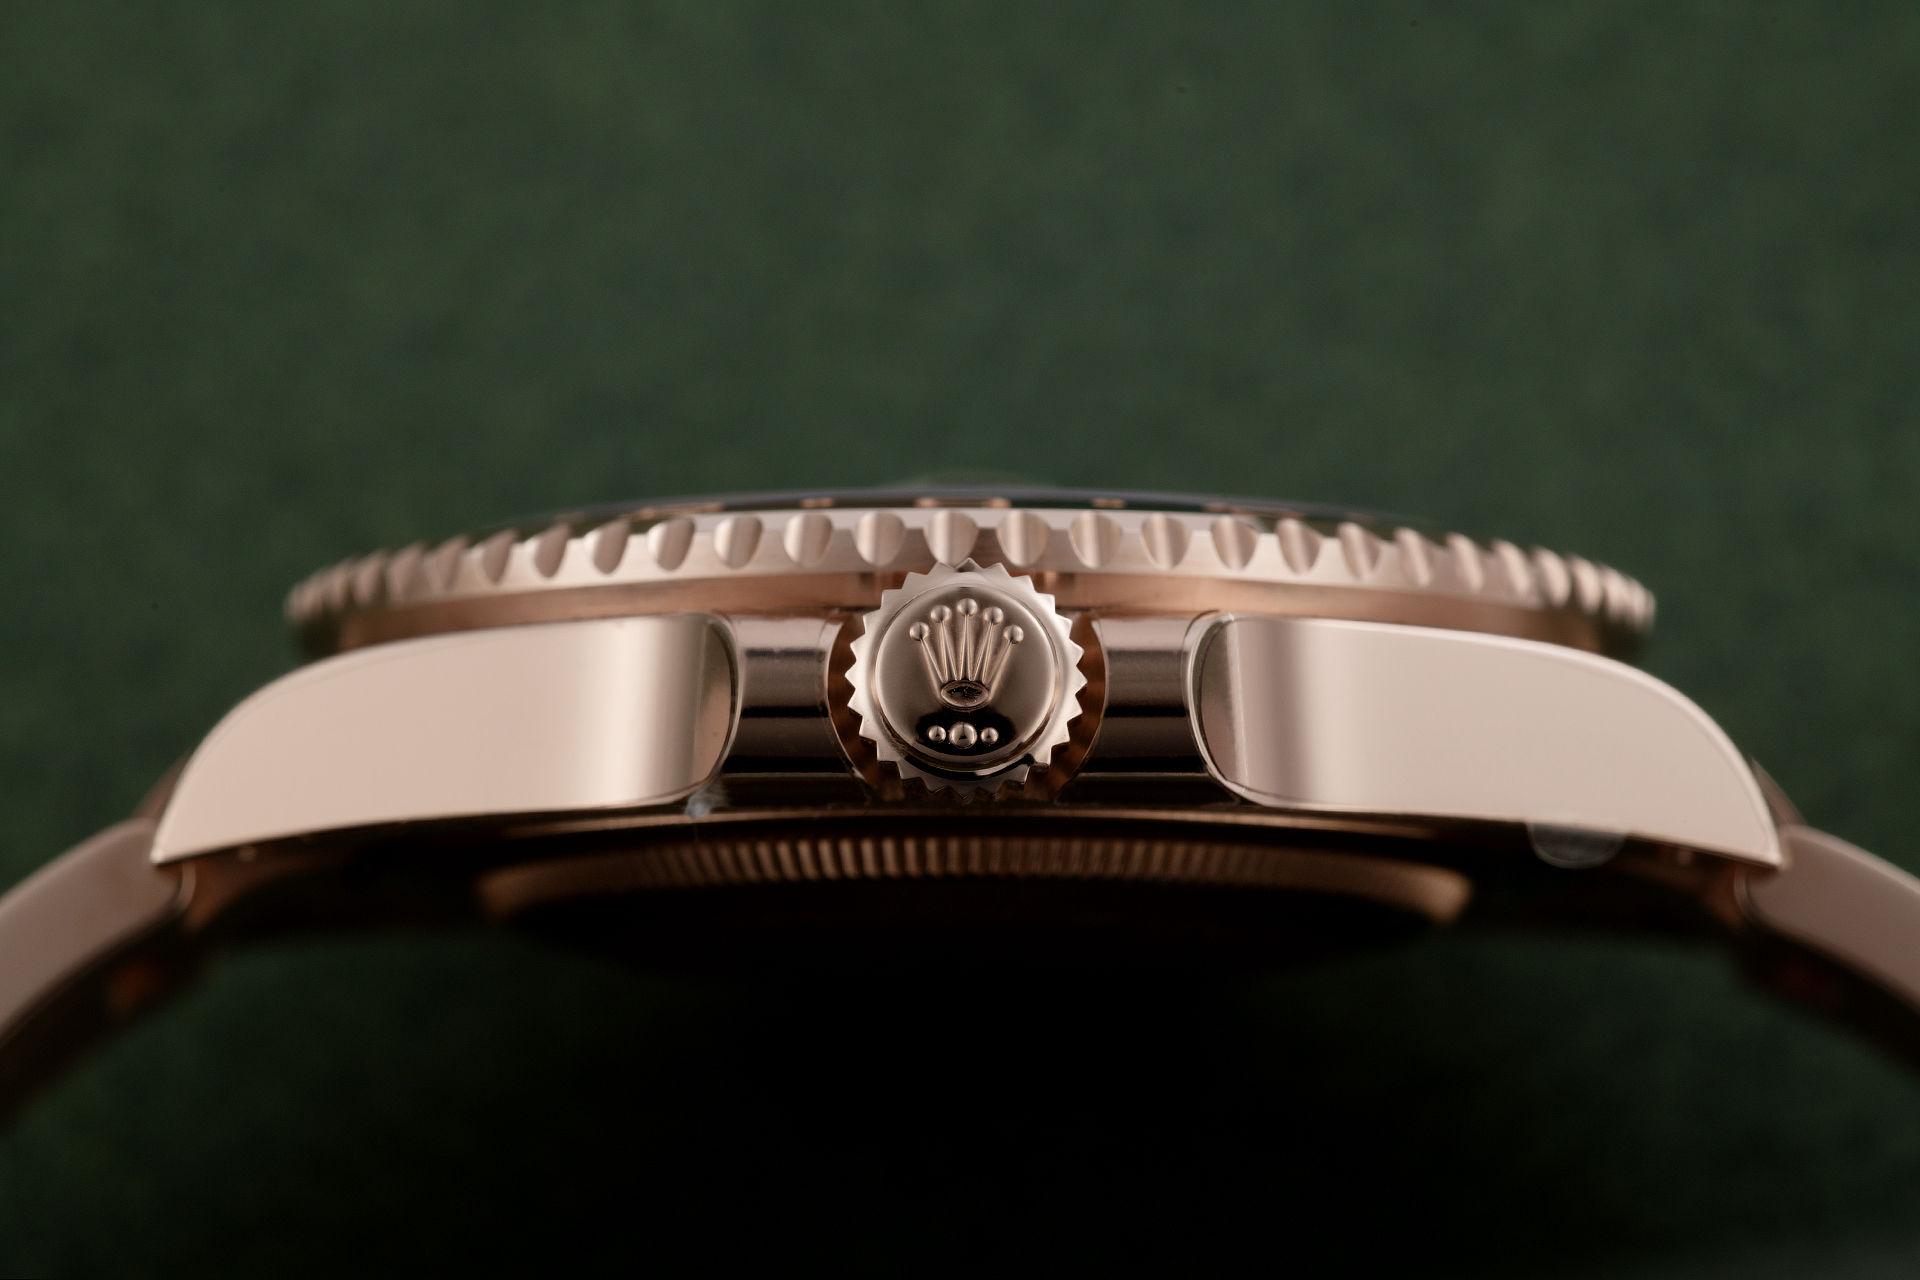 ref 126715CHNR | Brand New 5 Year Warranty  | Rolex GMT-Master II